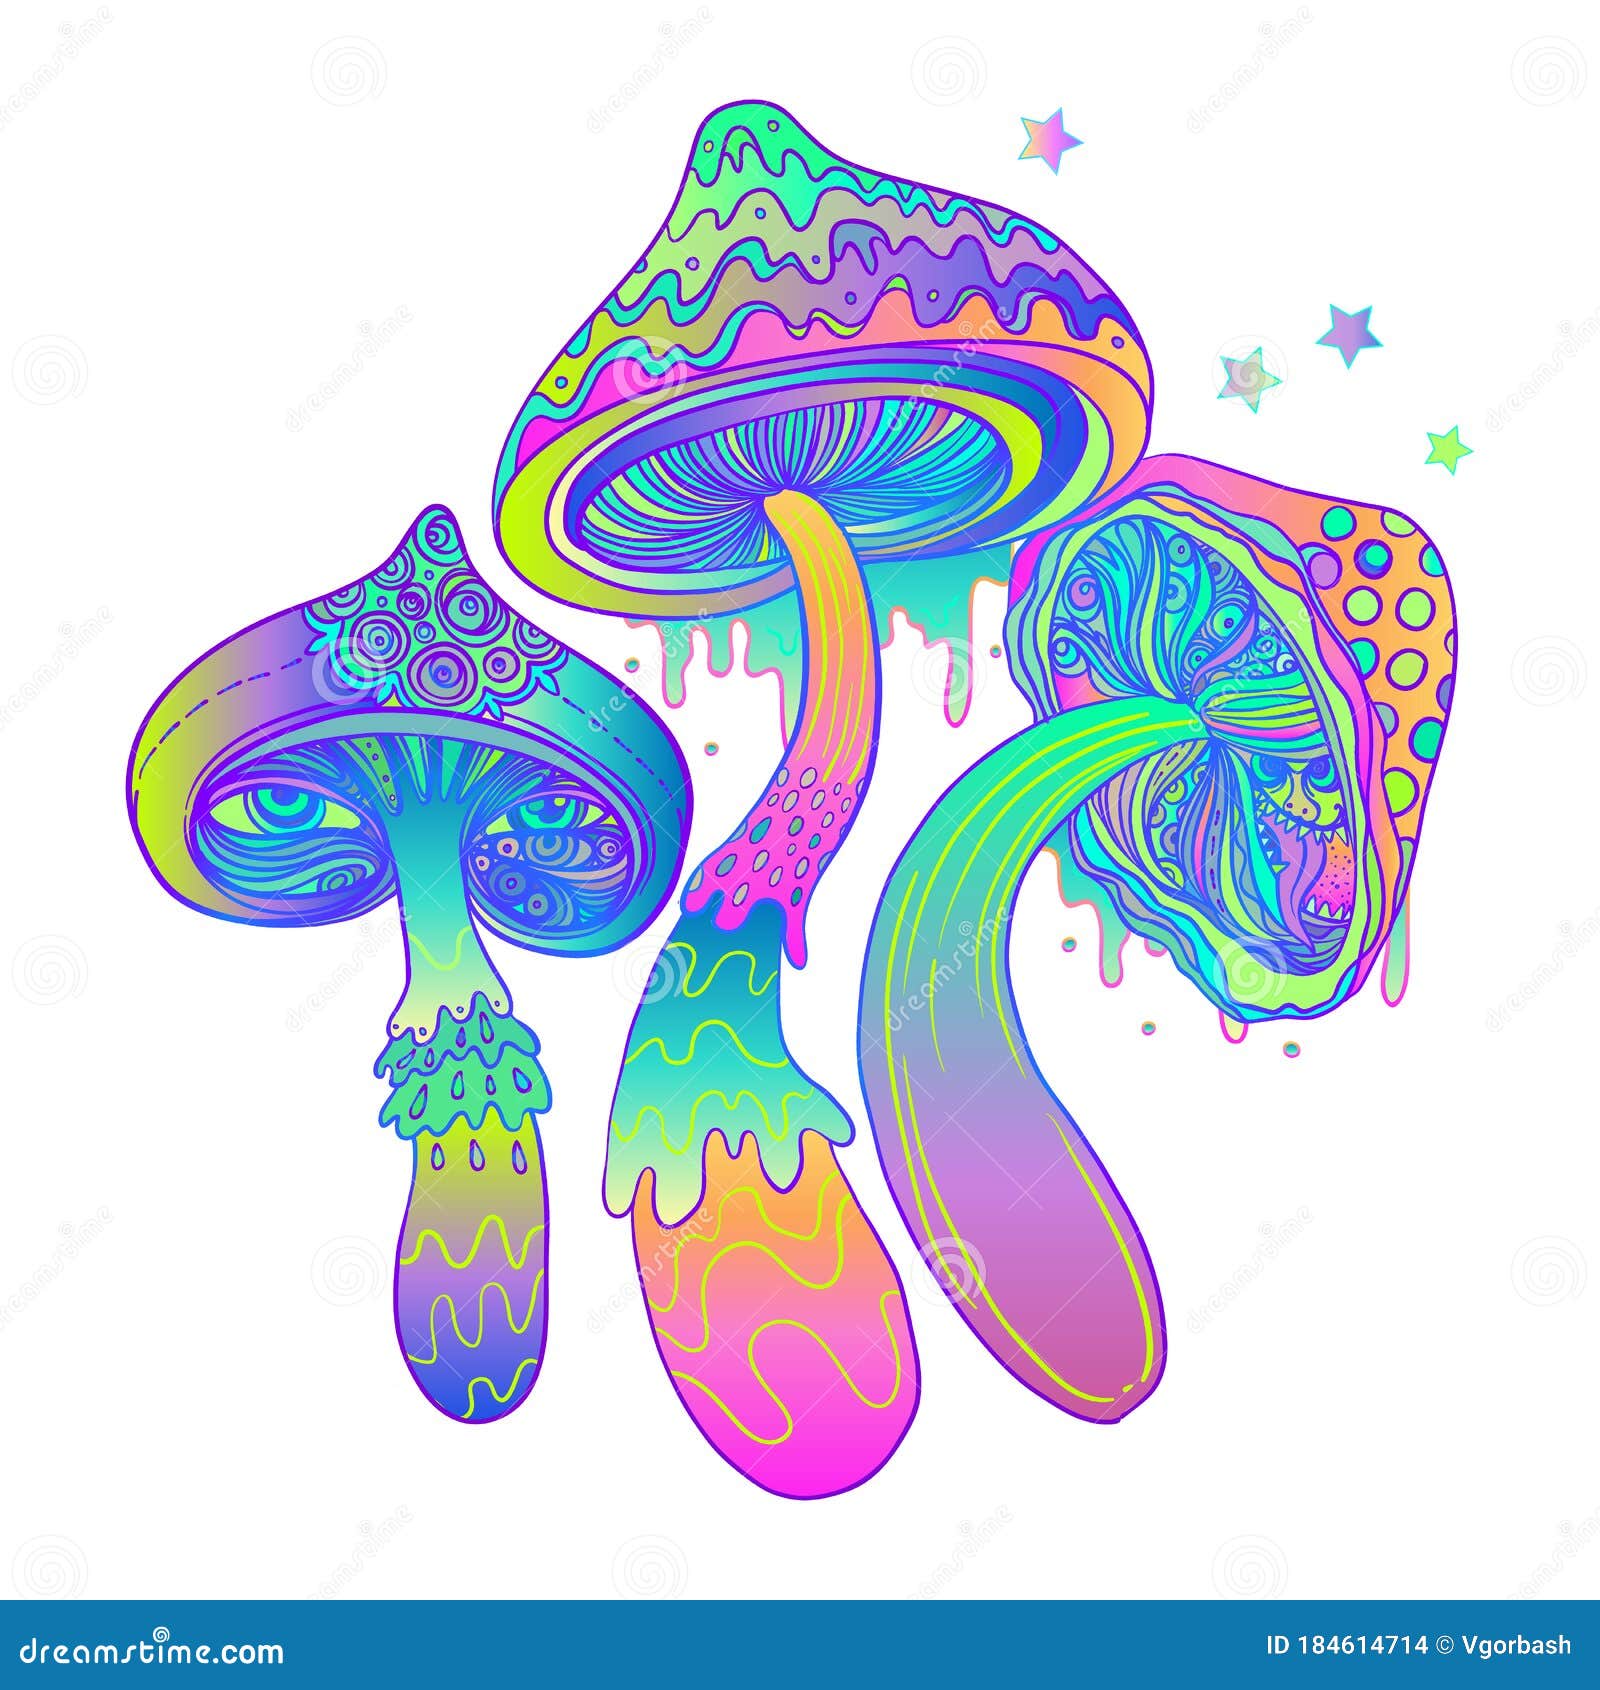 psilocybin mushrooms art